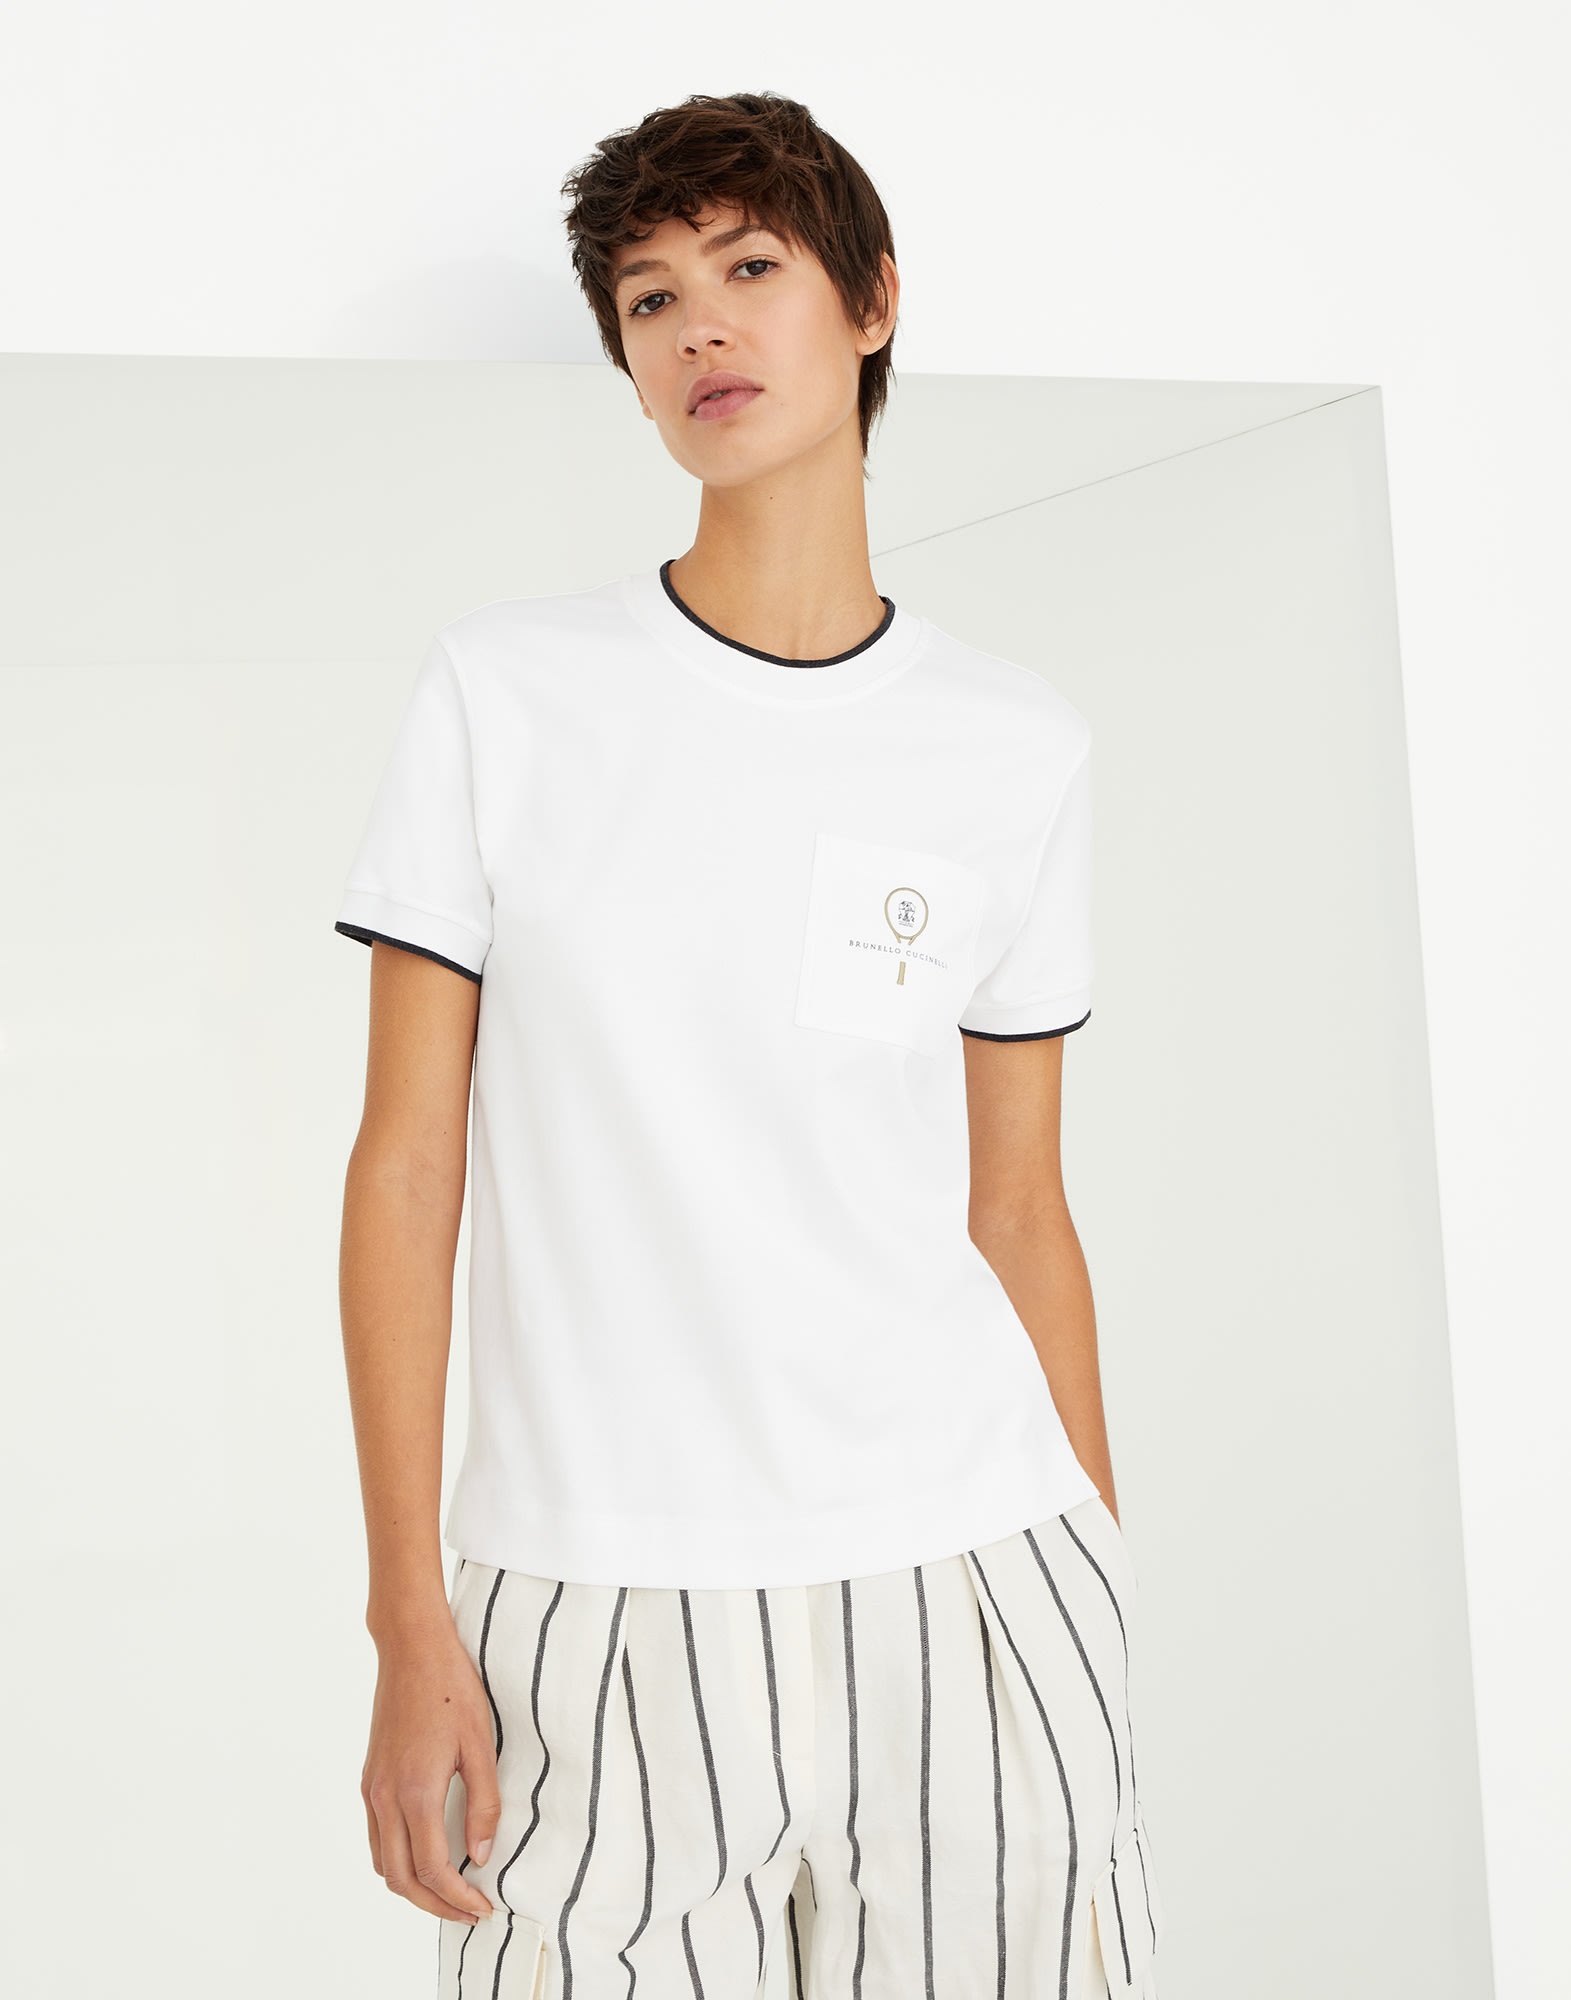 Cotton interlock t-shirt with tennis logo - 1